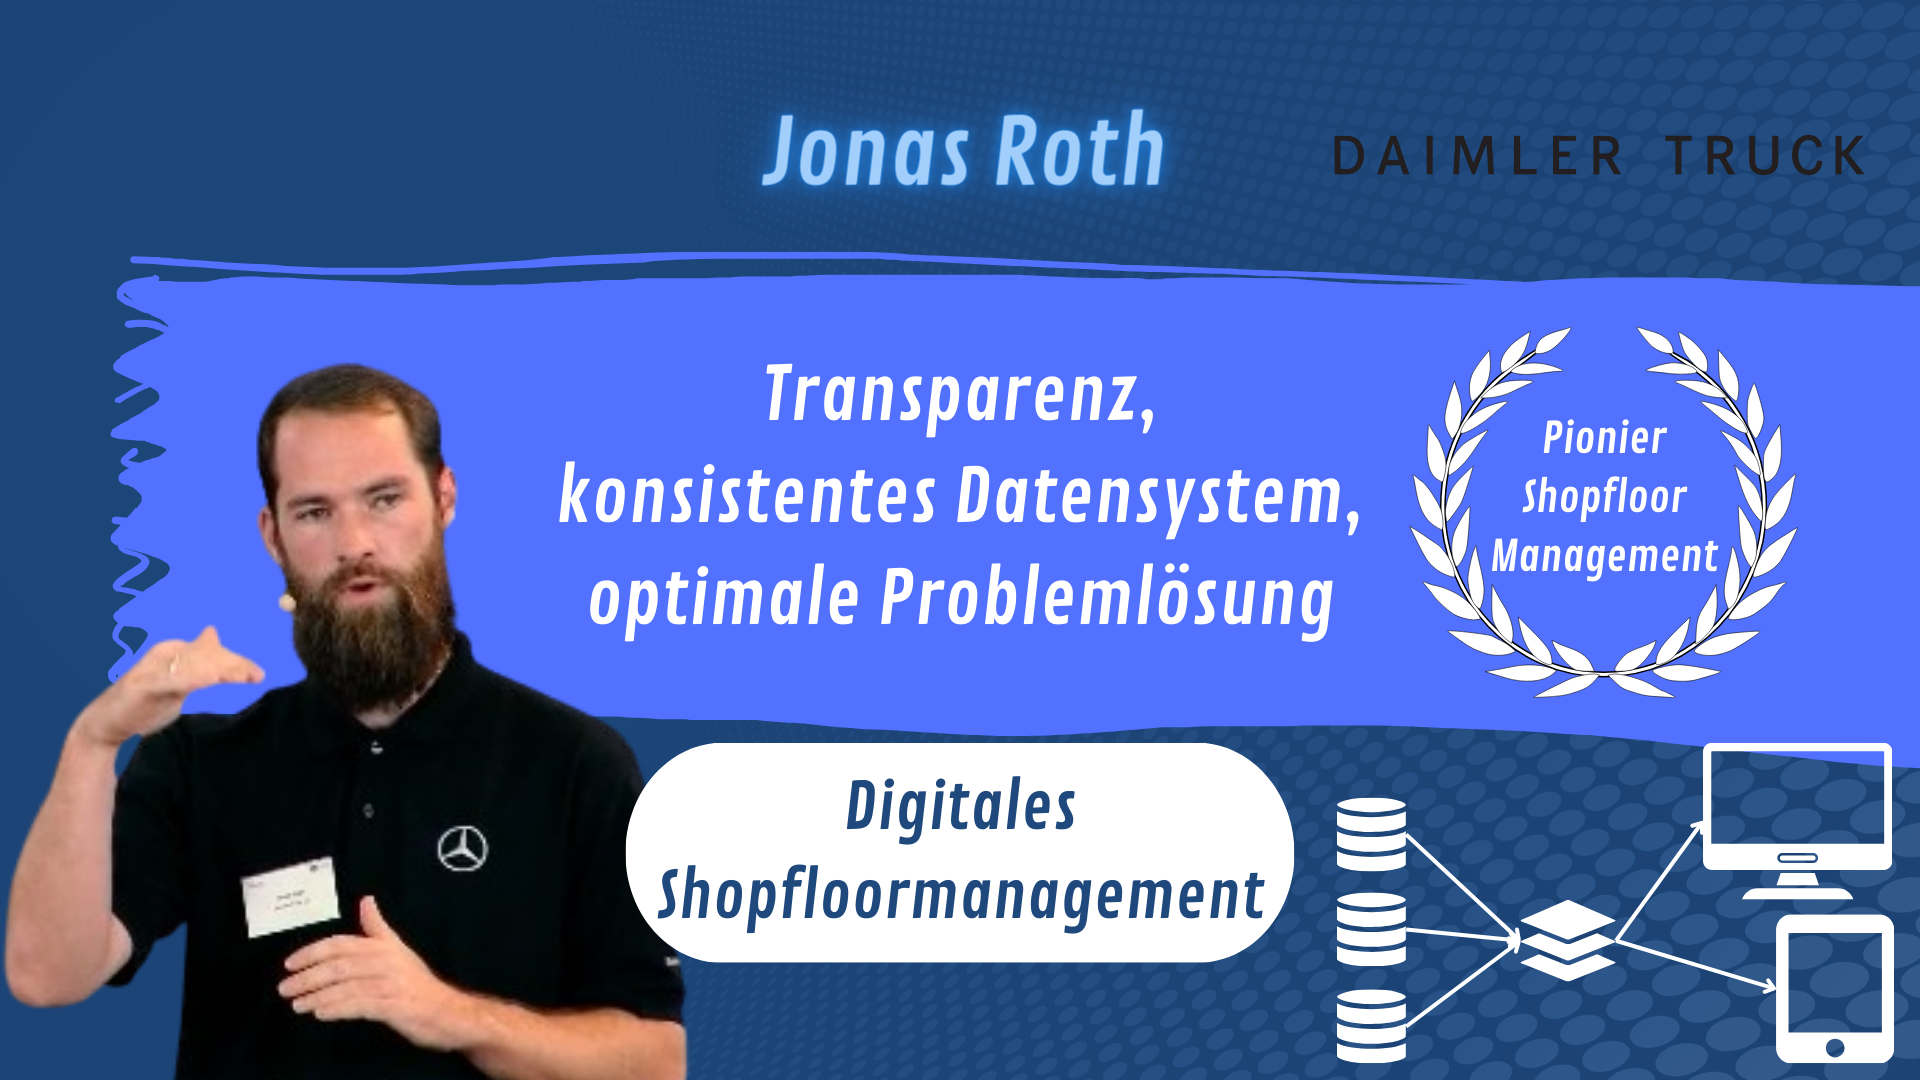 LEAN - Digitales Shopfloormanagement mit Jonas Roth